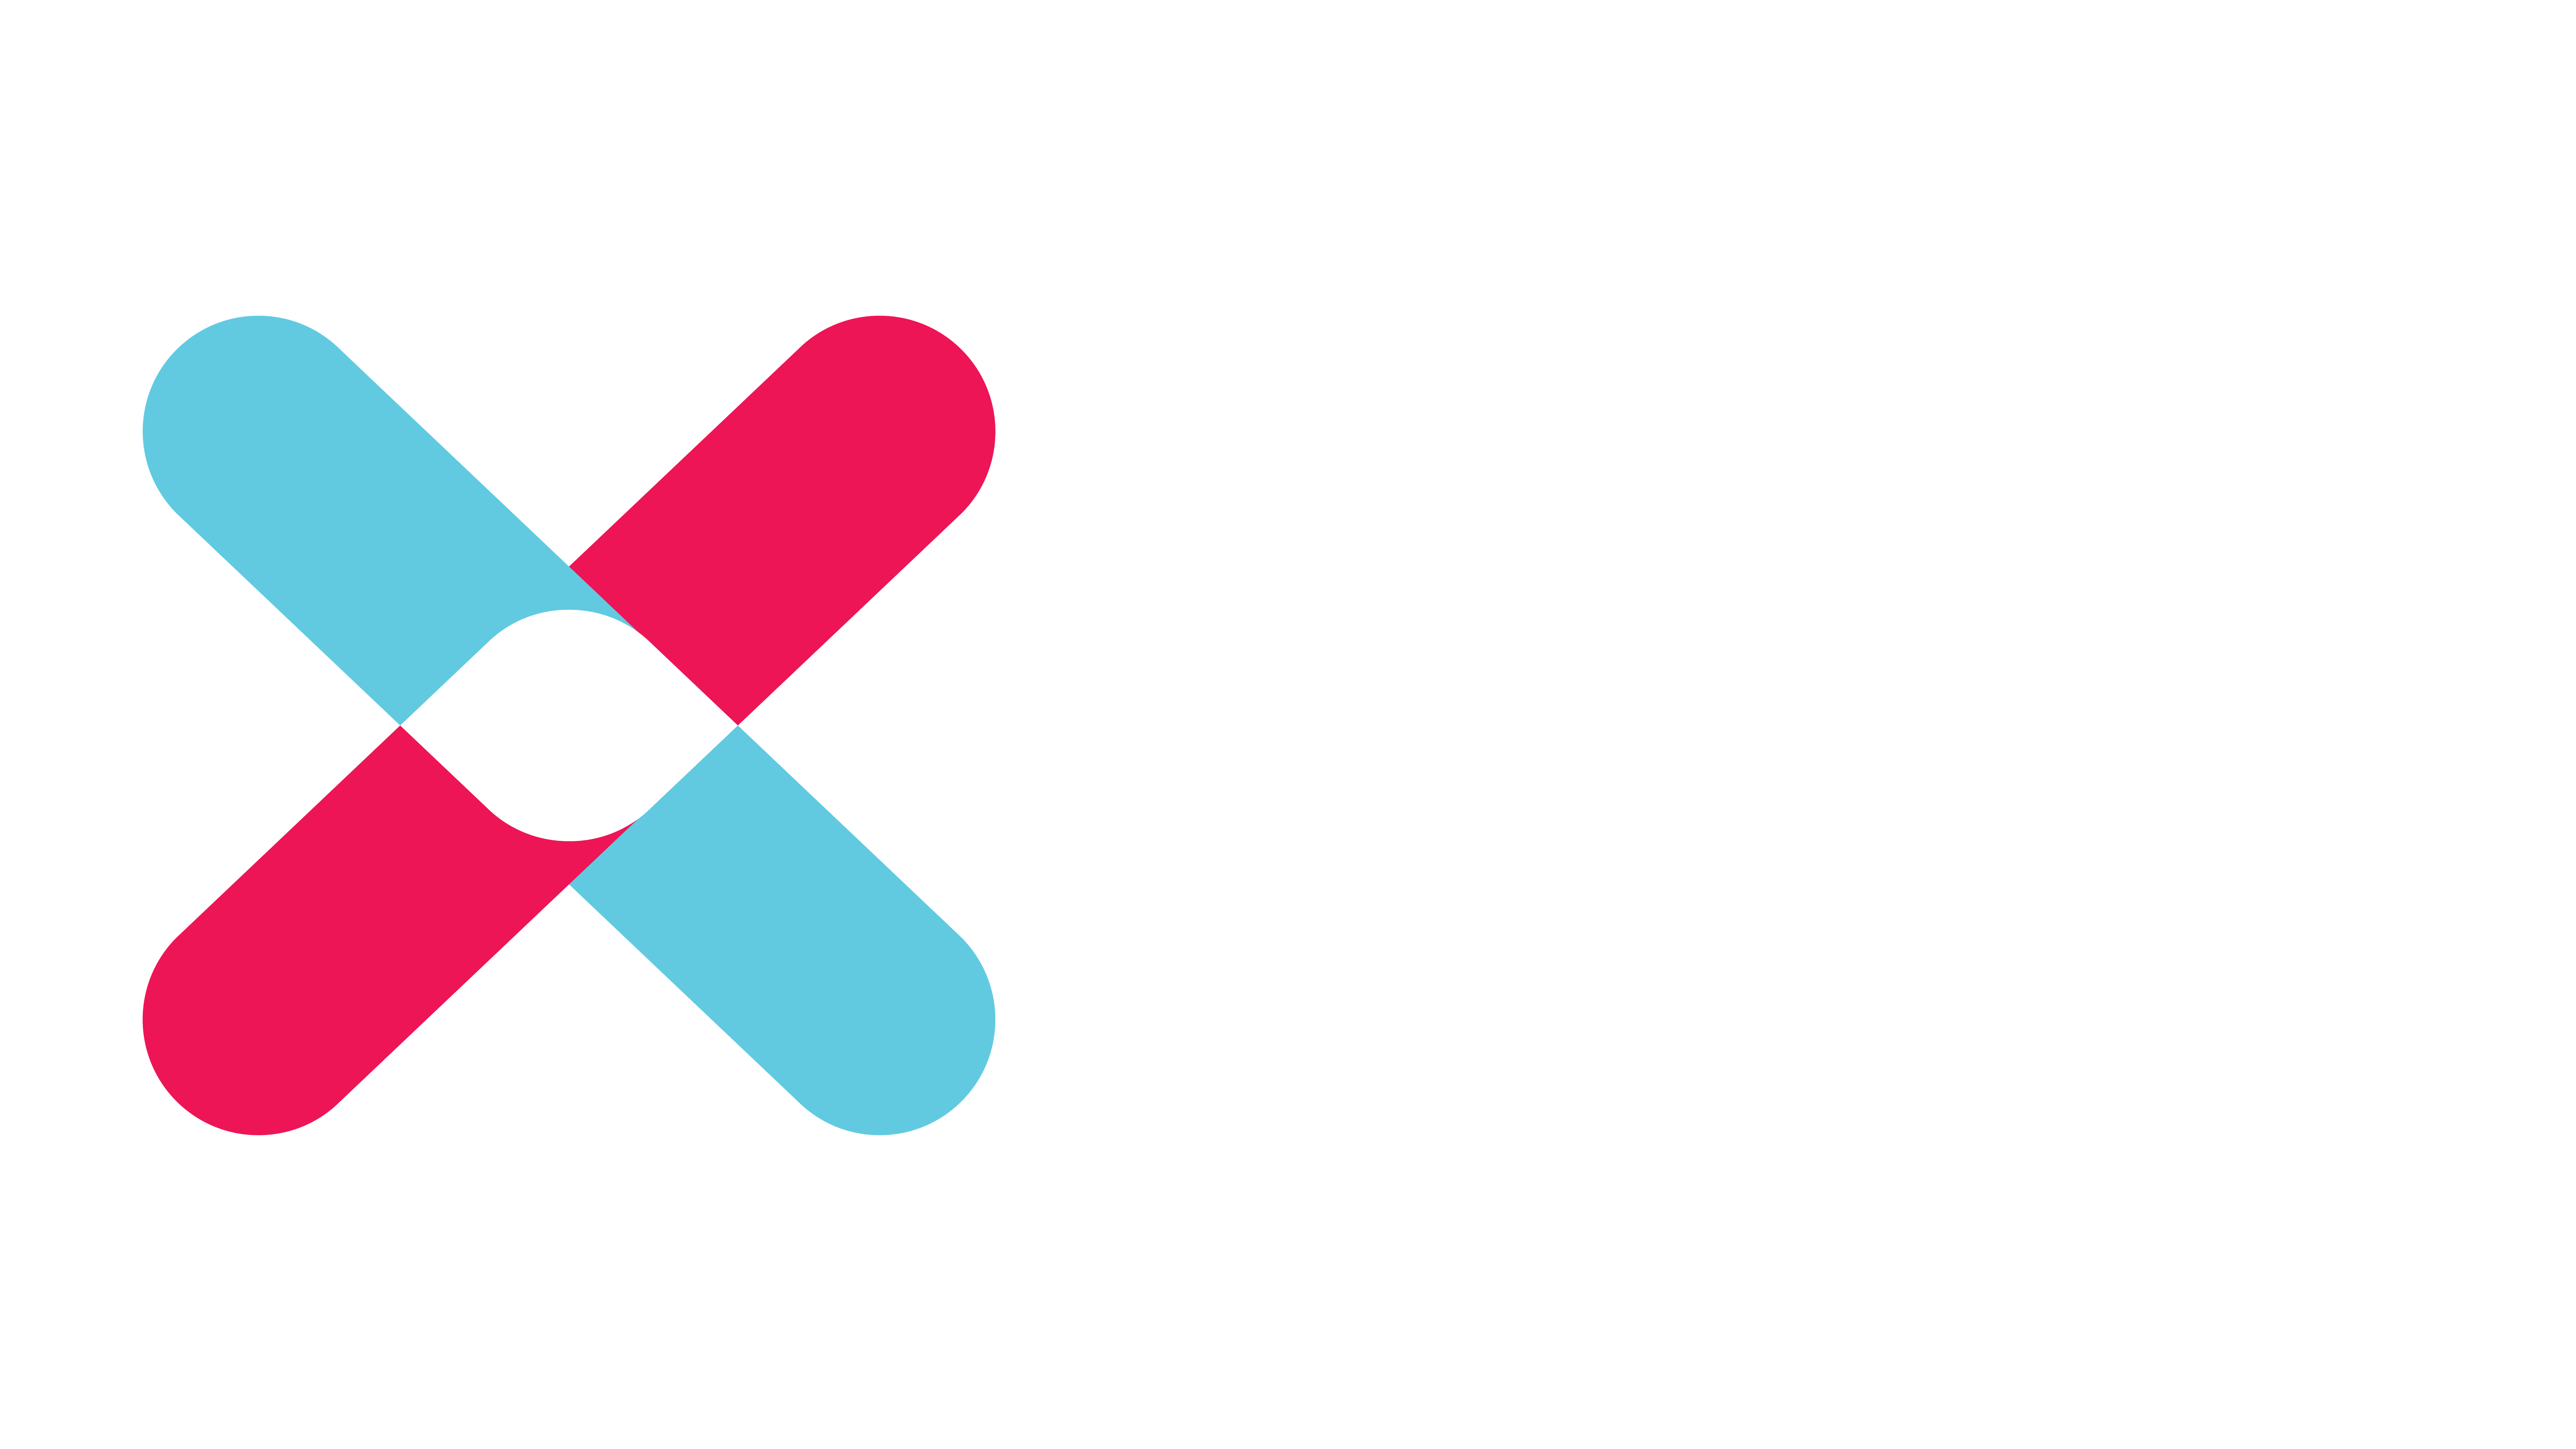 xlab digital white logo